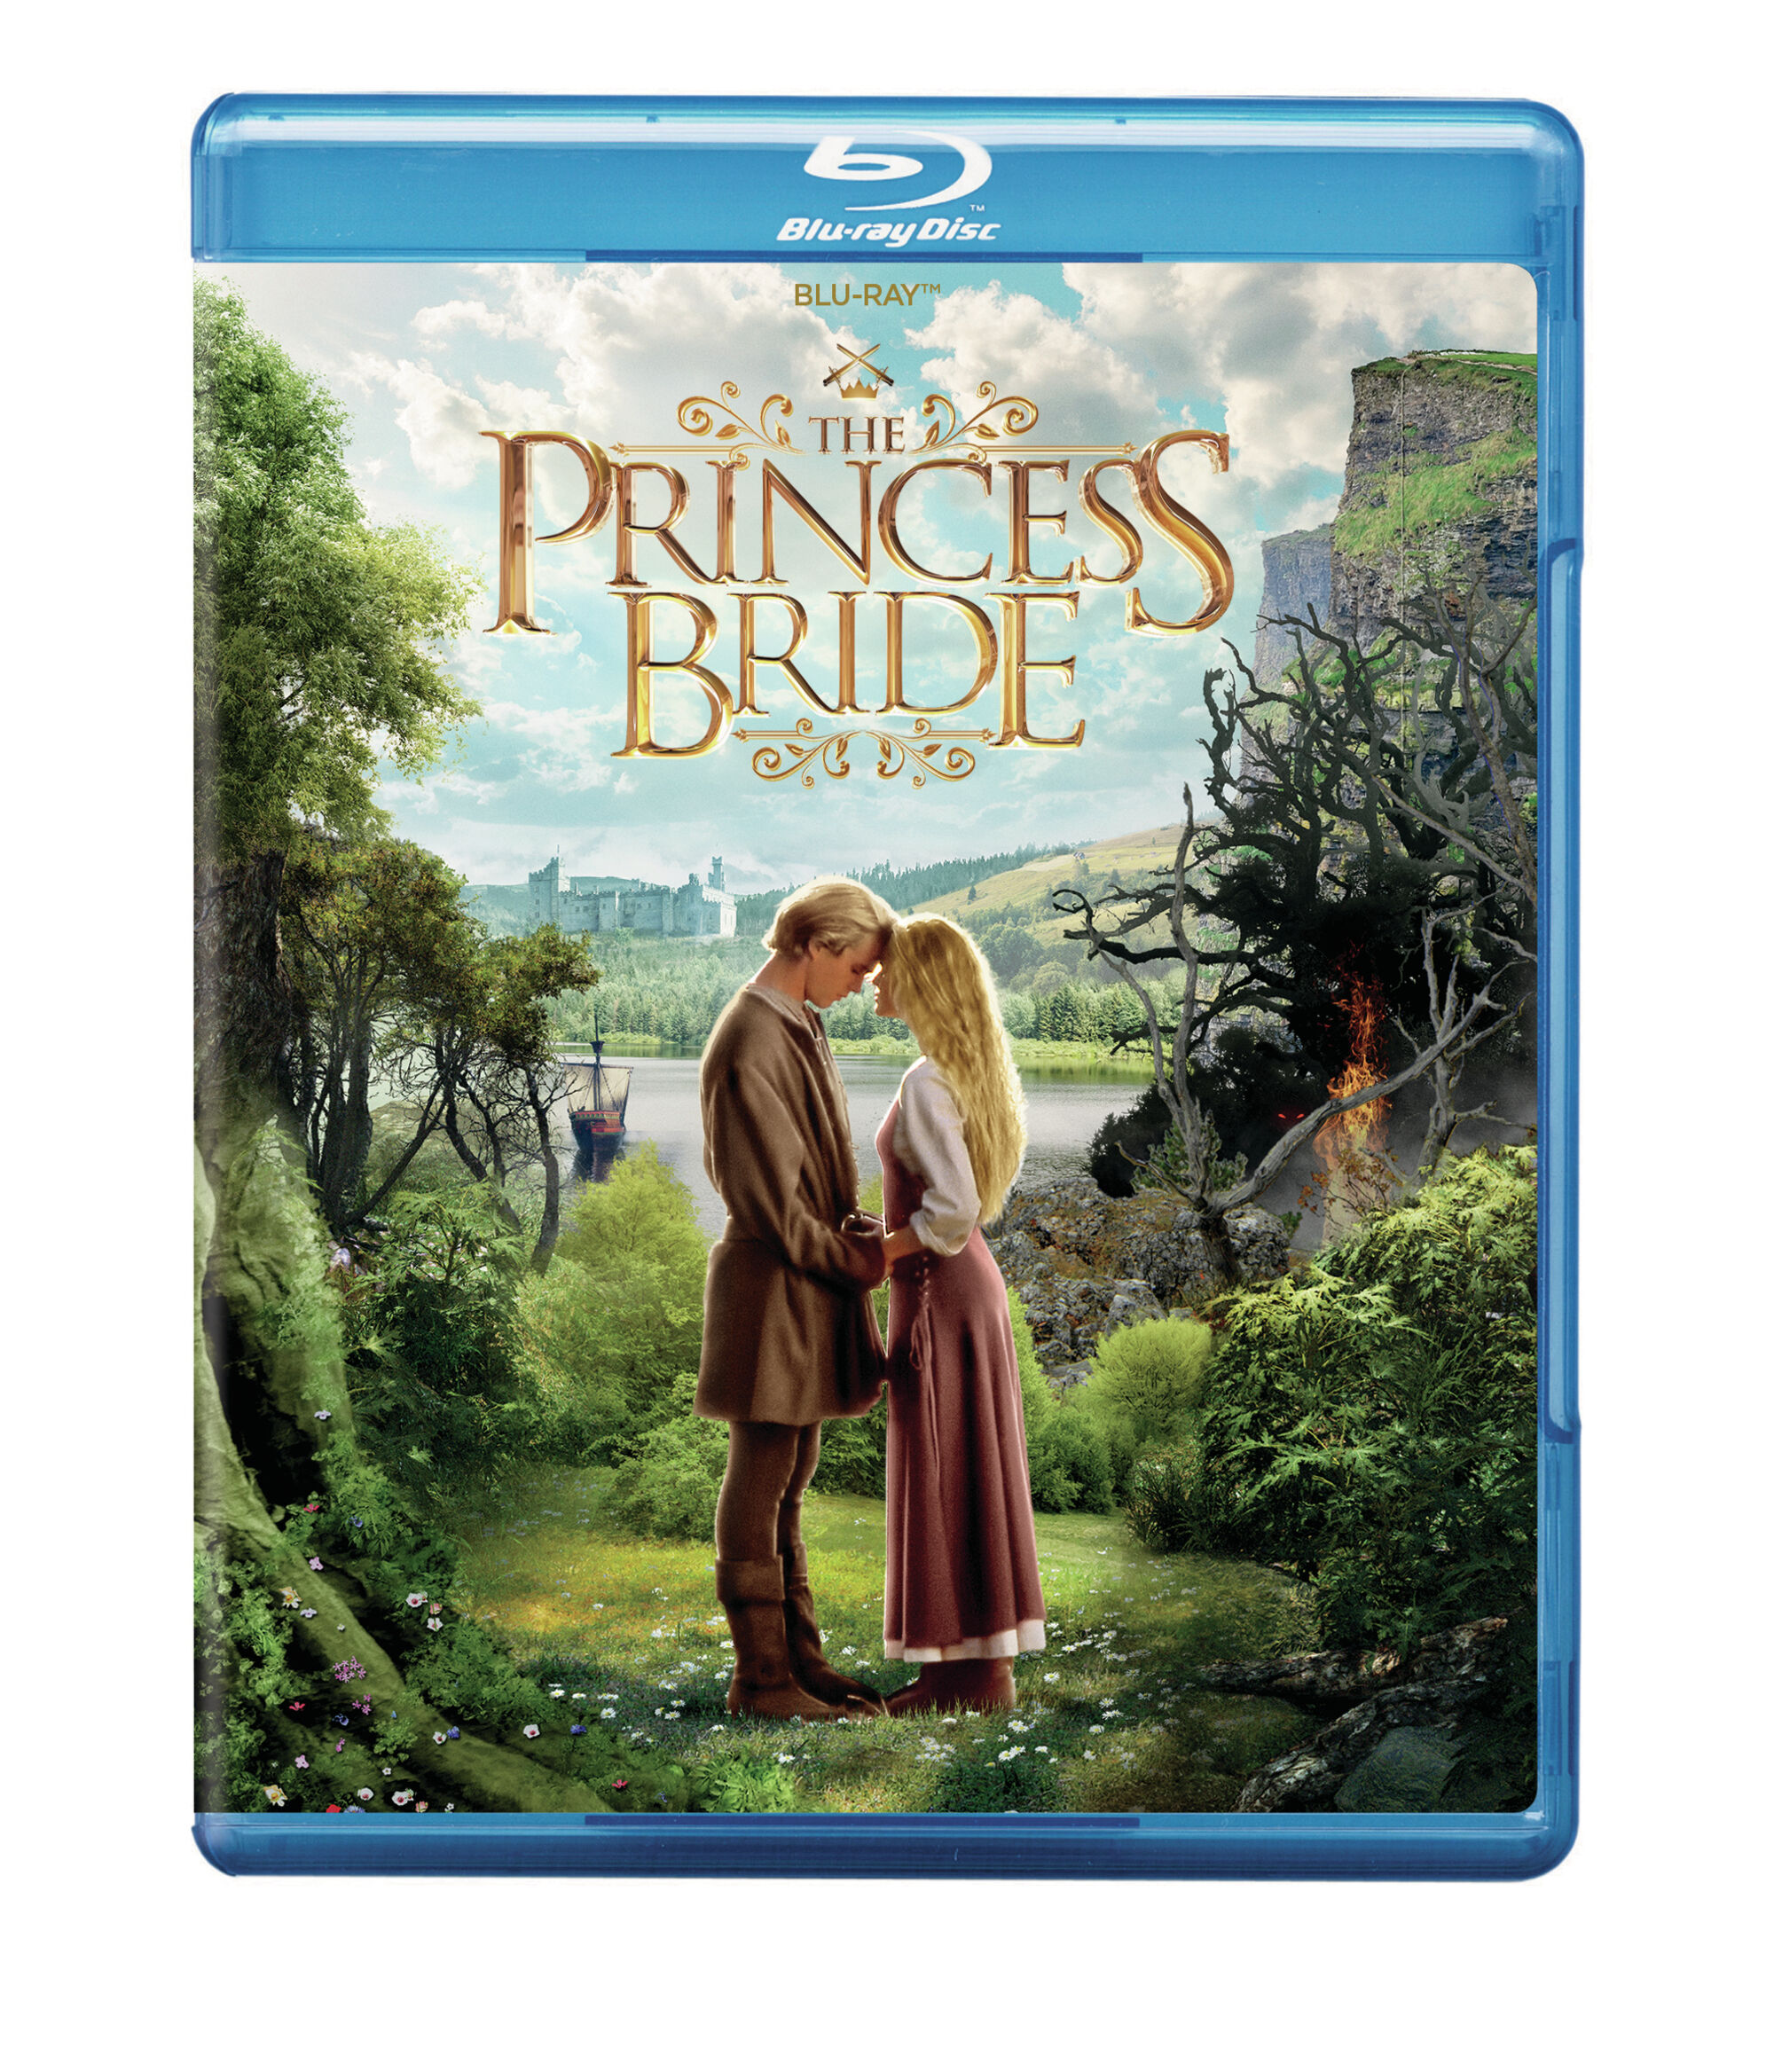 The Princess Bride (30th Anniversary Edition) - Blu-ray [ 1987 ]  - Comedy Movies On Blu-ray - Movies On GRUV